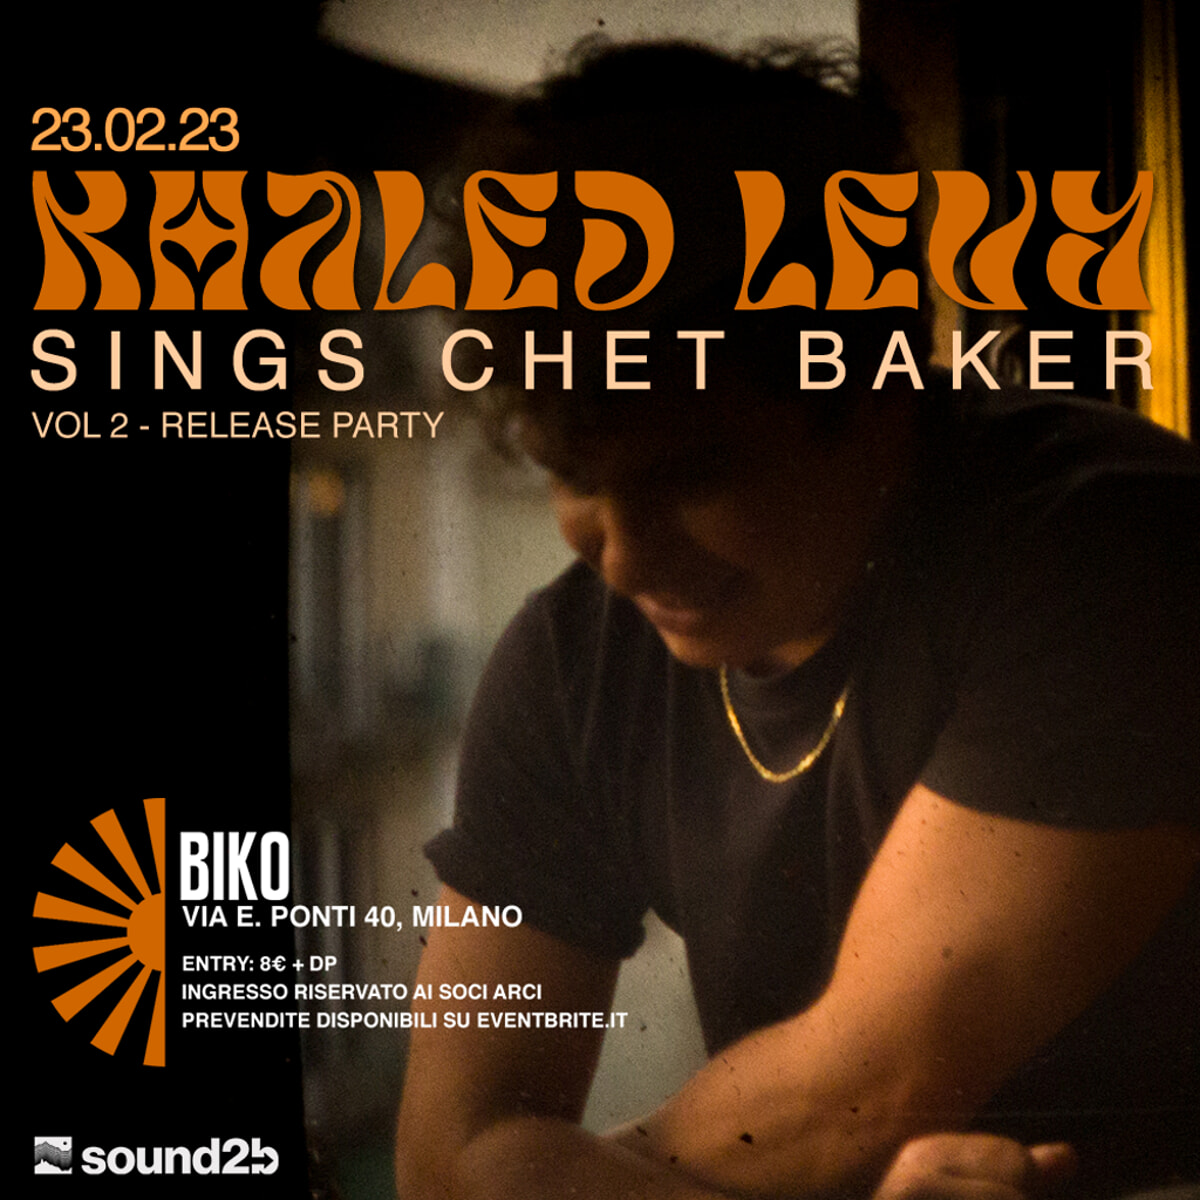 Khaled levy sings chet baker vol. 2 release party